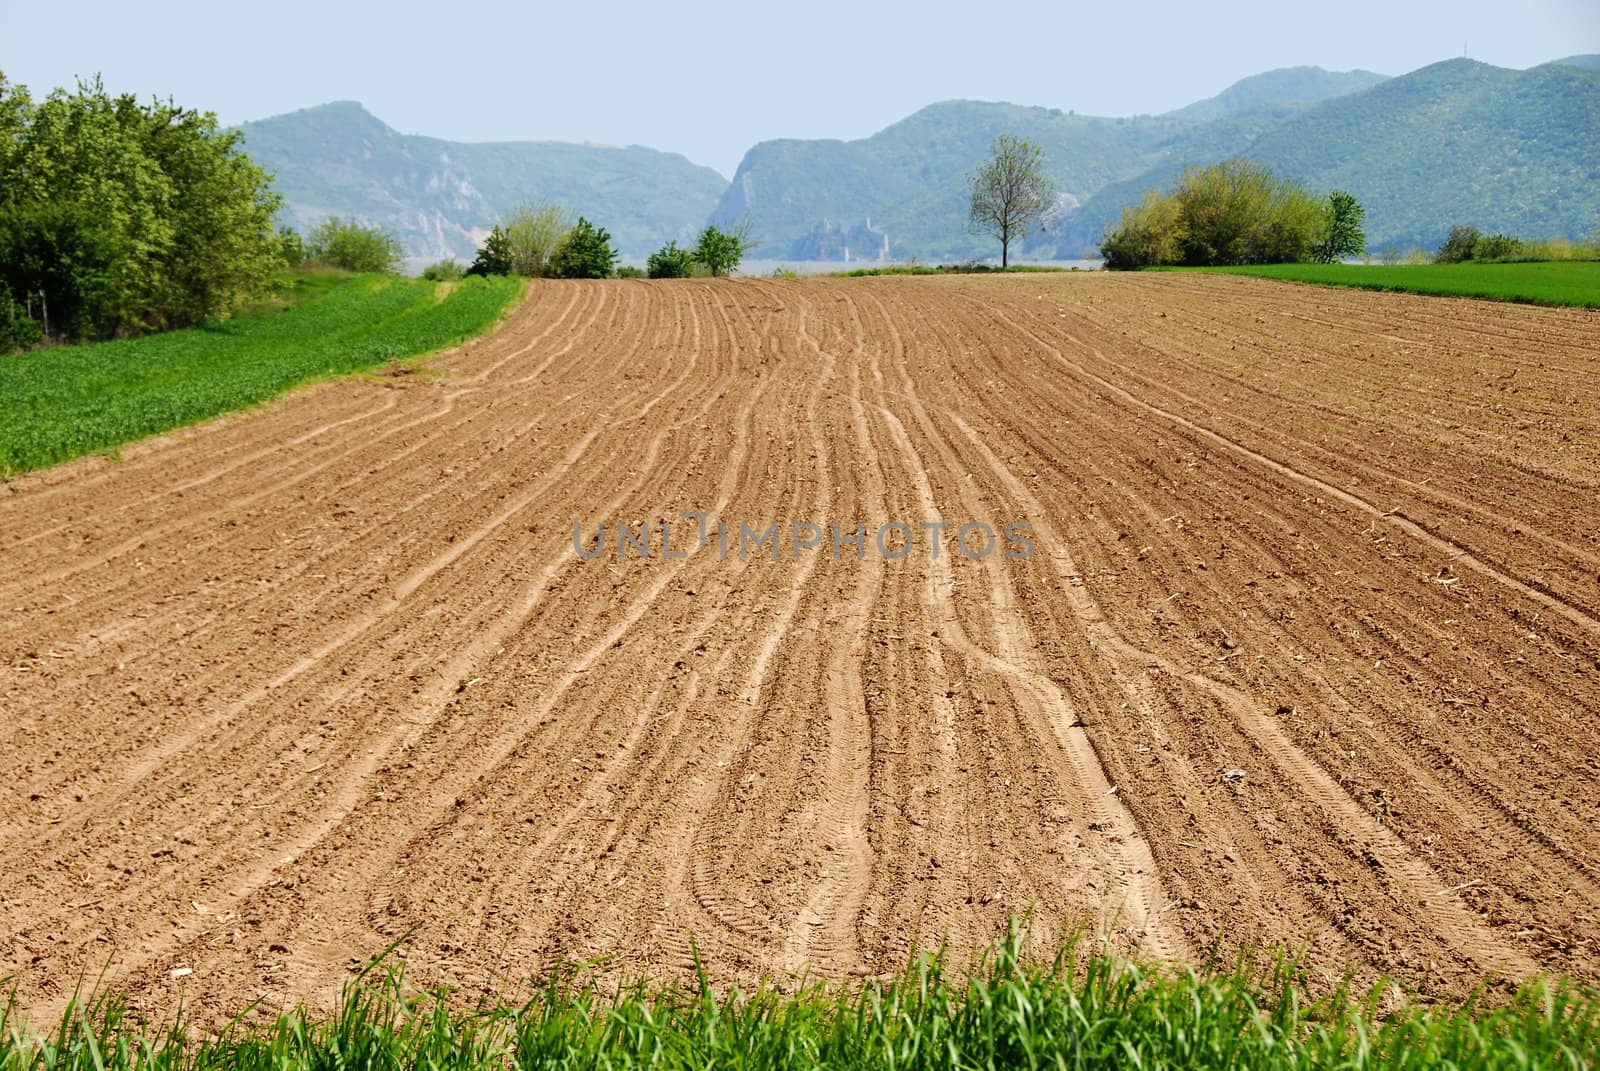 Plowed field by simply